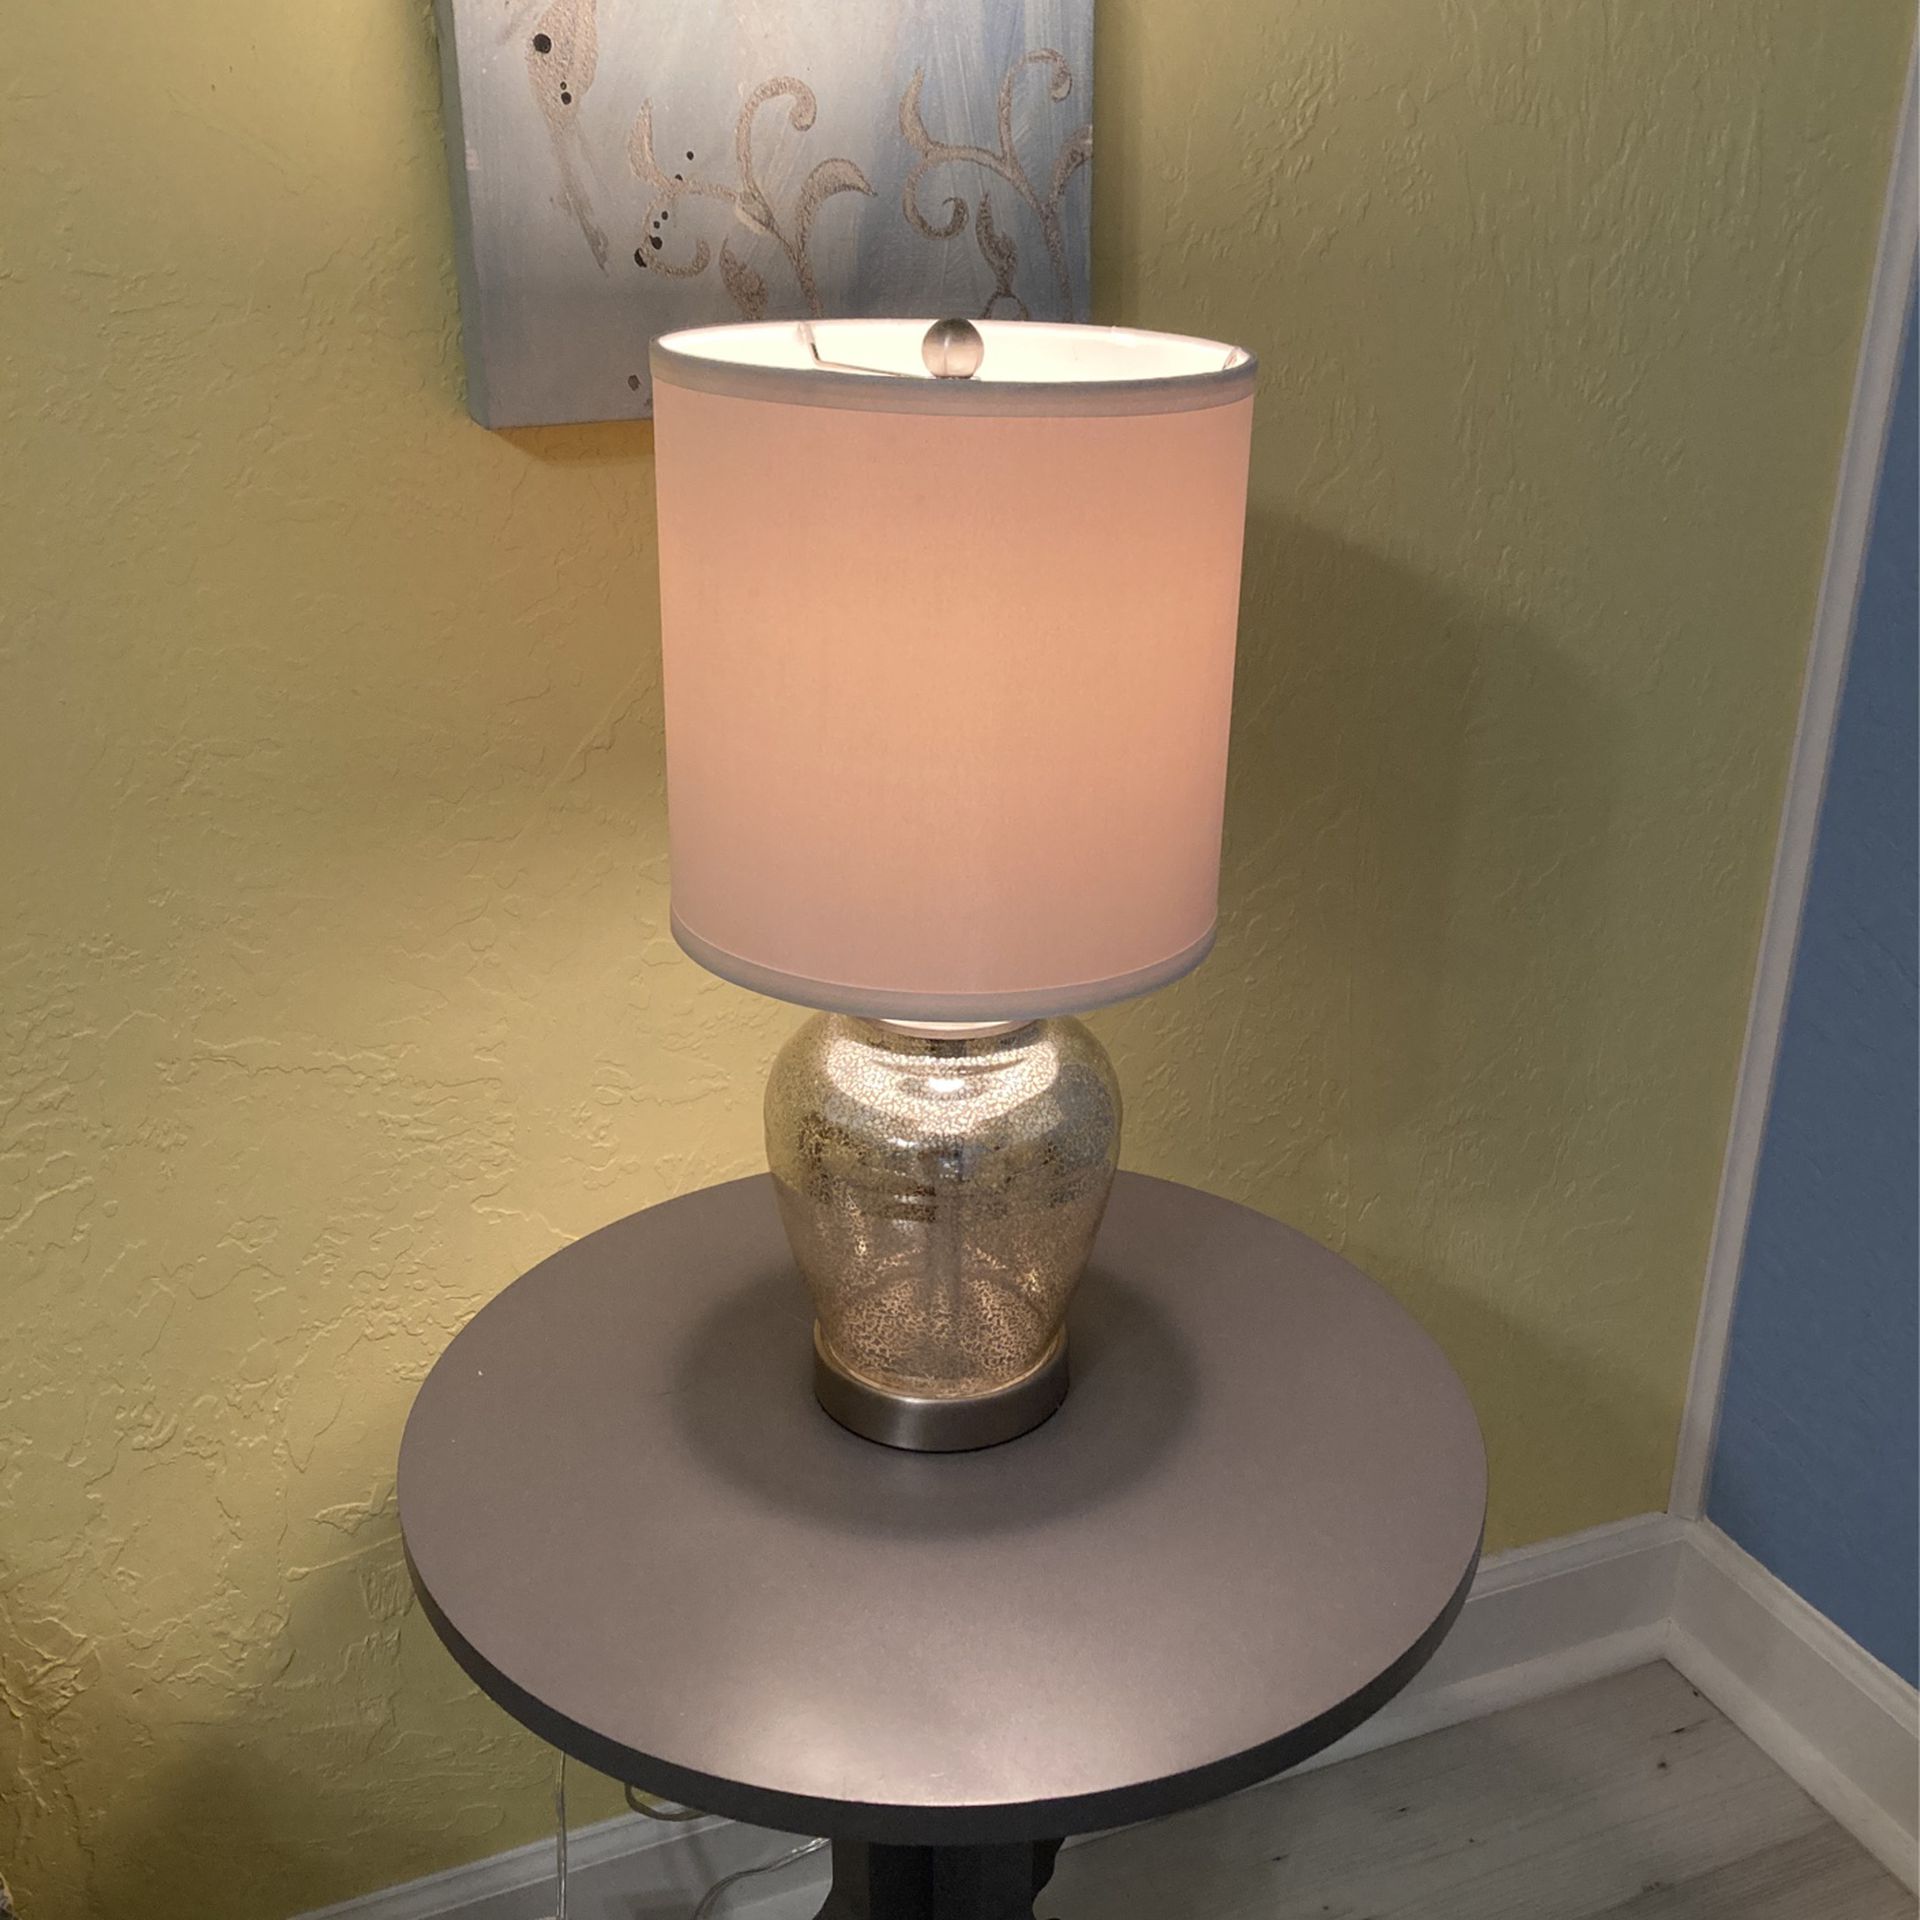 Small Table Lamp 18.5” Tall, Desk, Stools, Shelves…